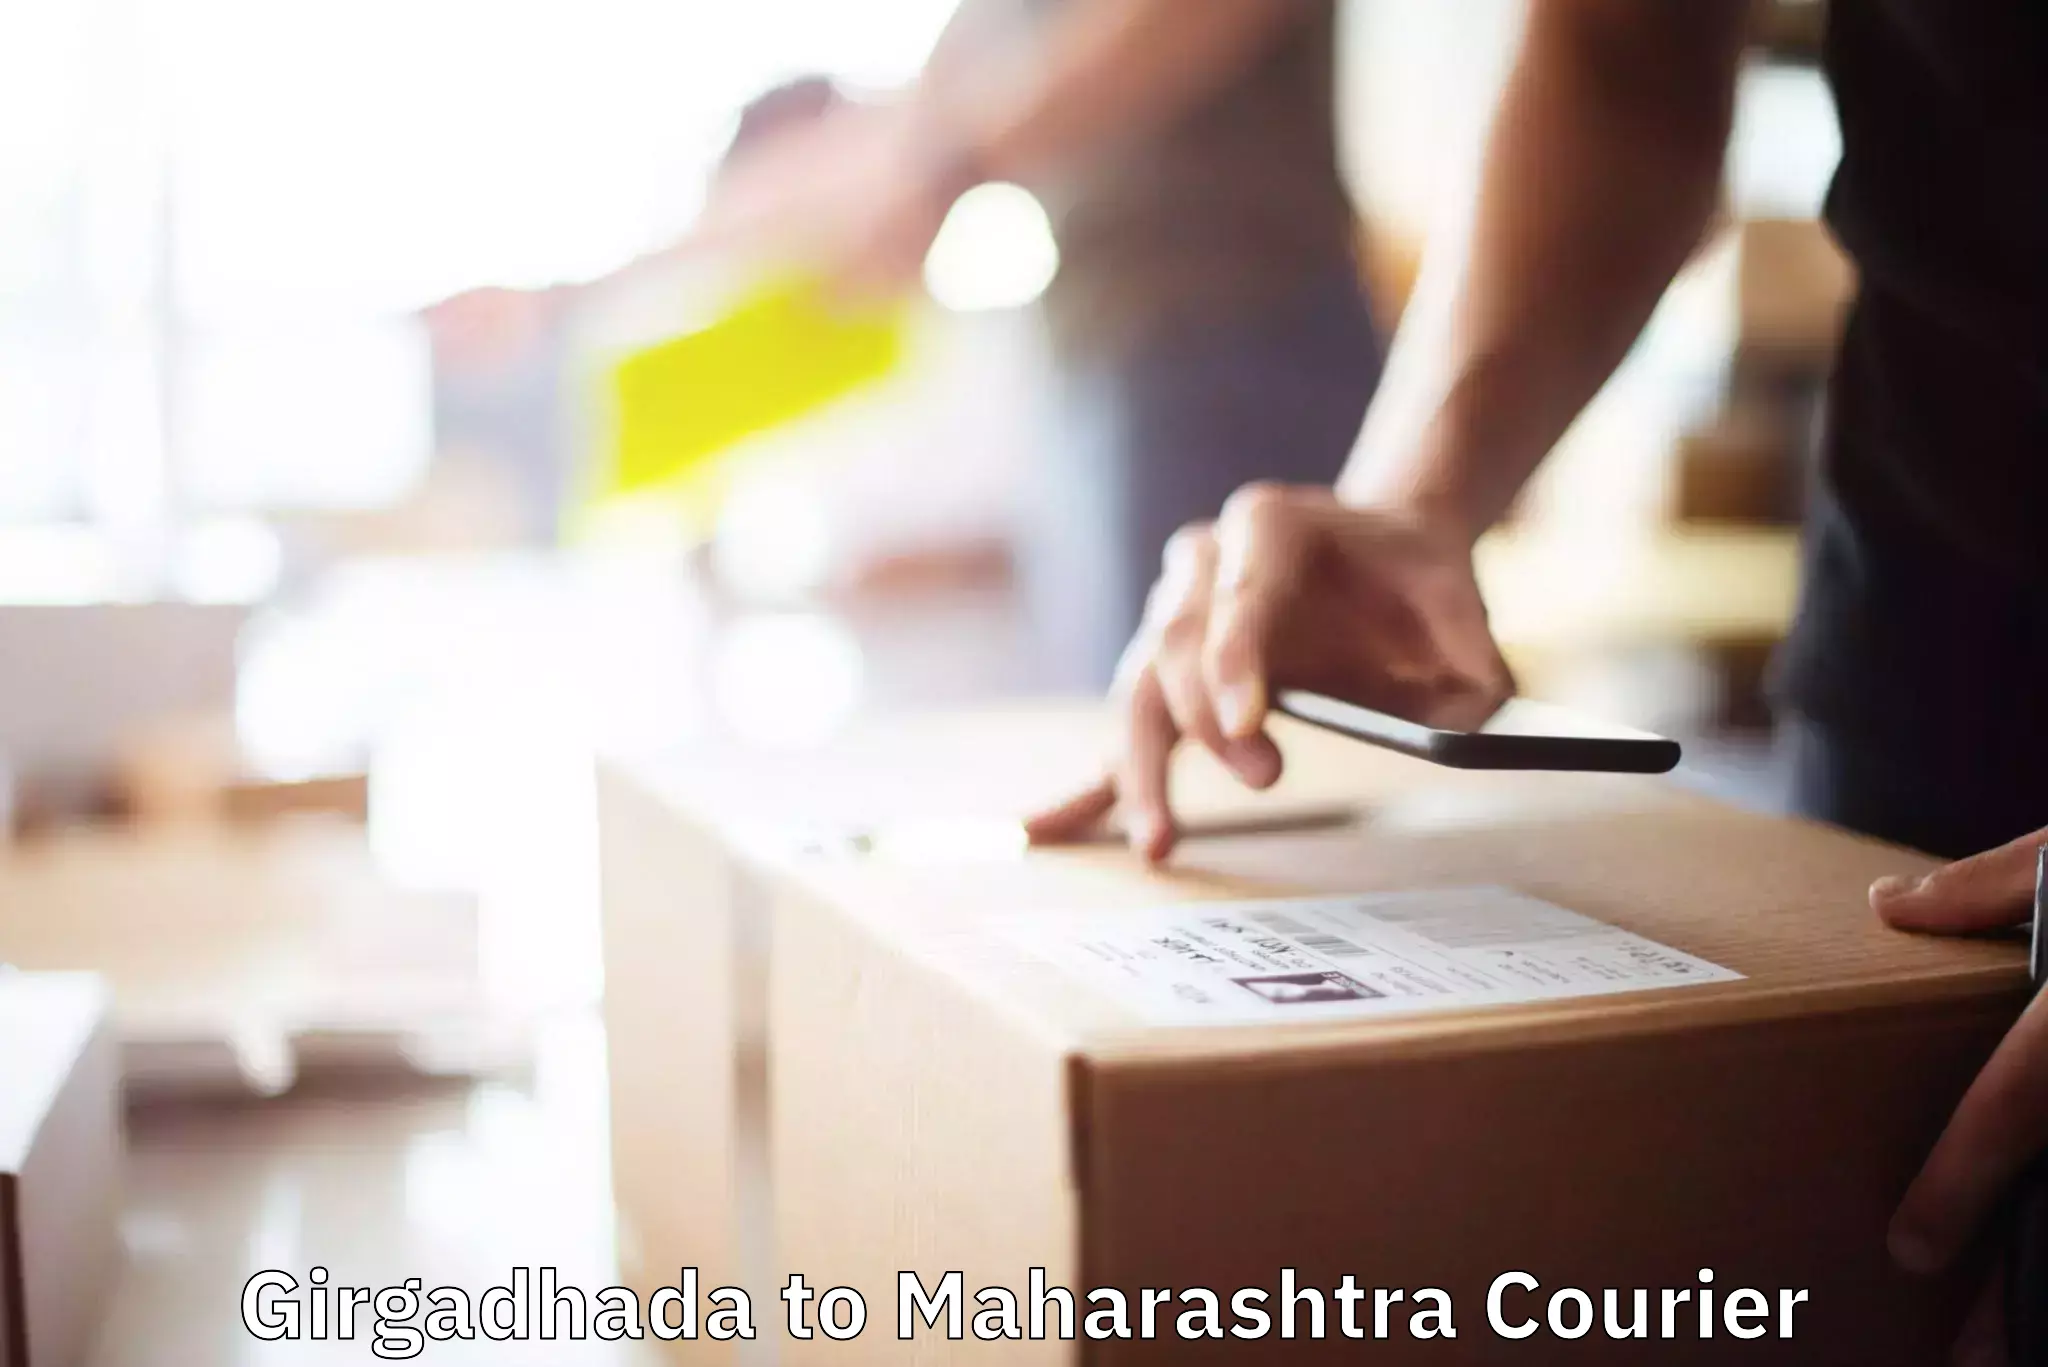 Moving and handling services Girgadhada to Maharashtra